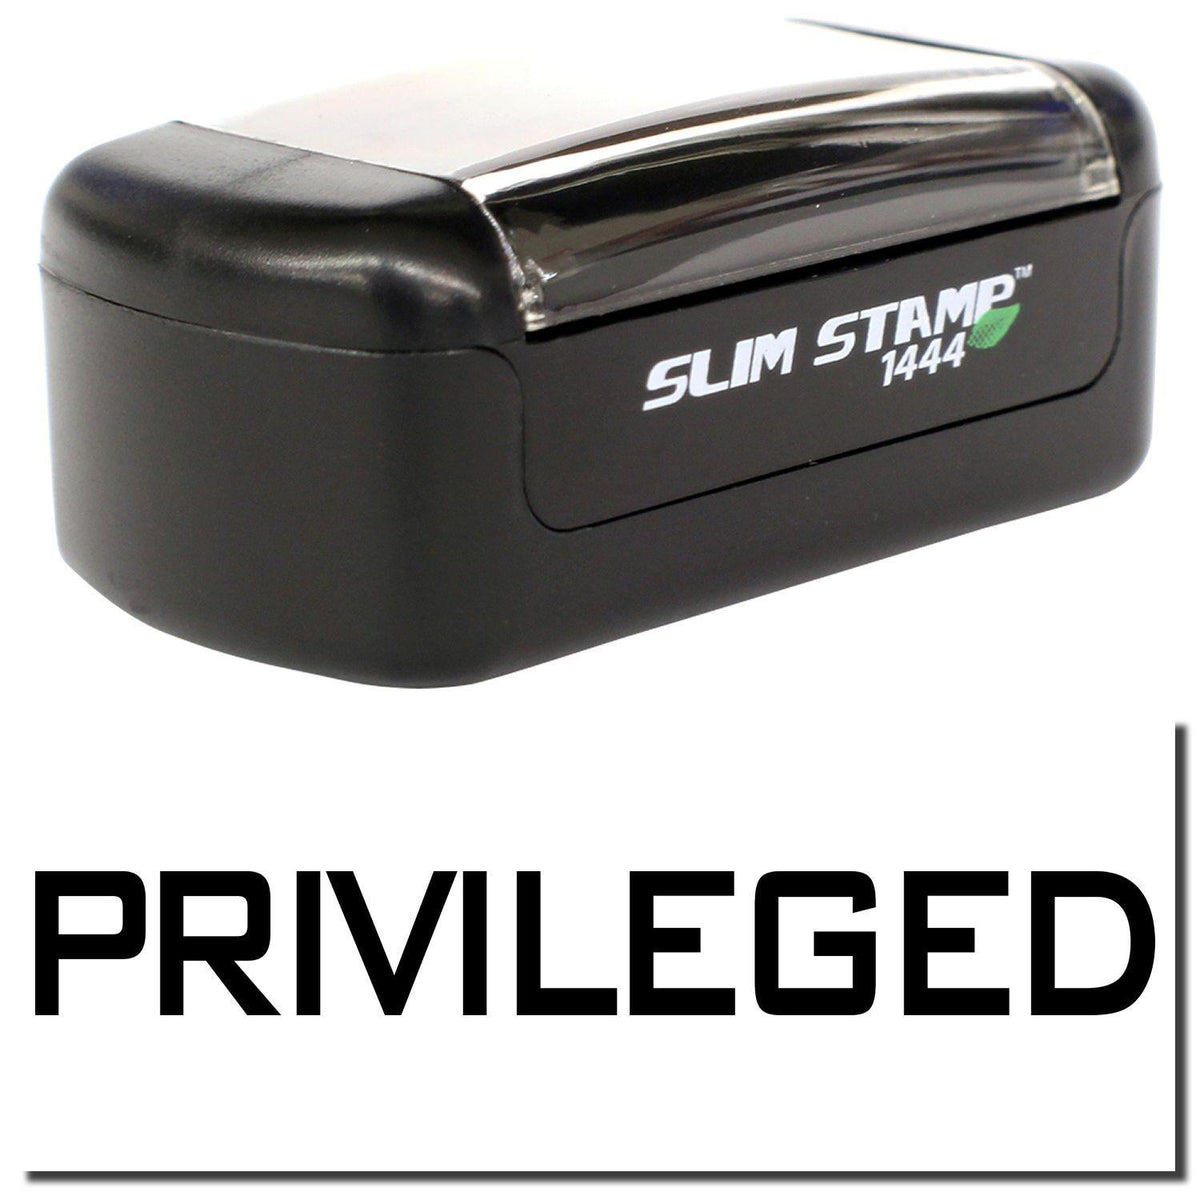 Slim Pre-Inked Privileged Stamp Main Image